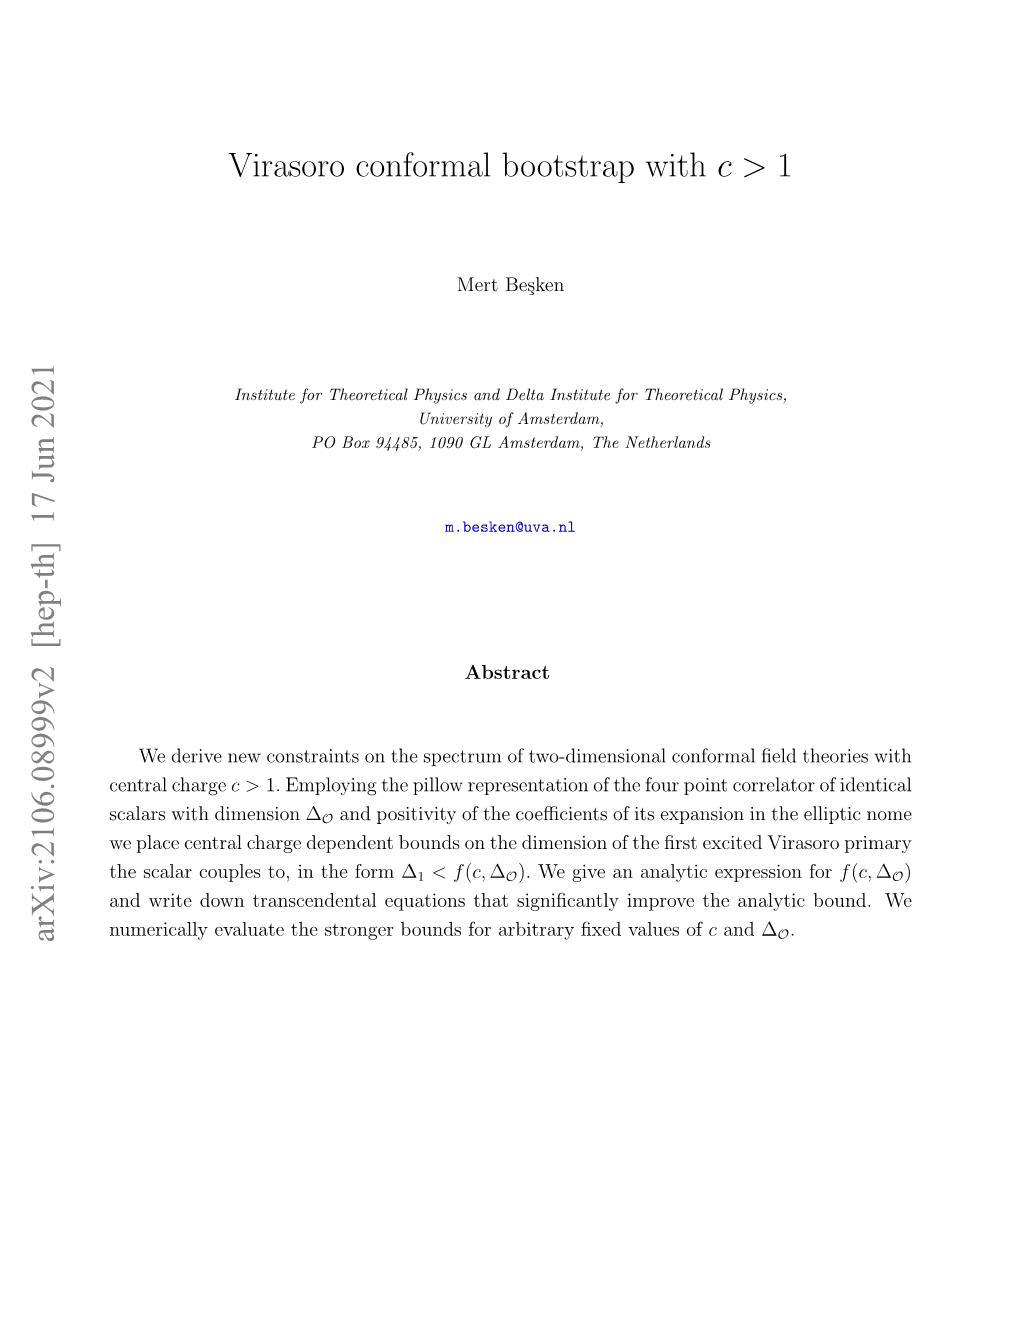 Virasoro Conformal Bootstrap with C &gt; 1 Arxiv:2106.08999V2 [Hep-Th] 17